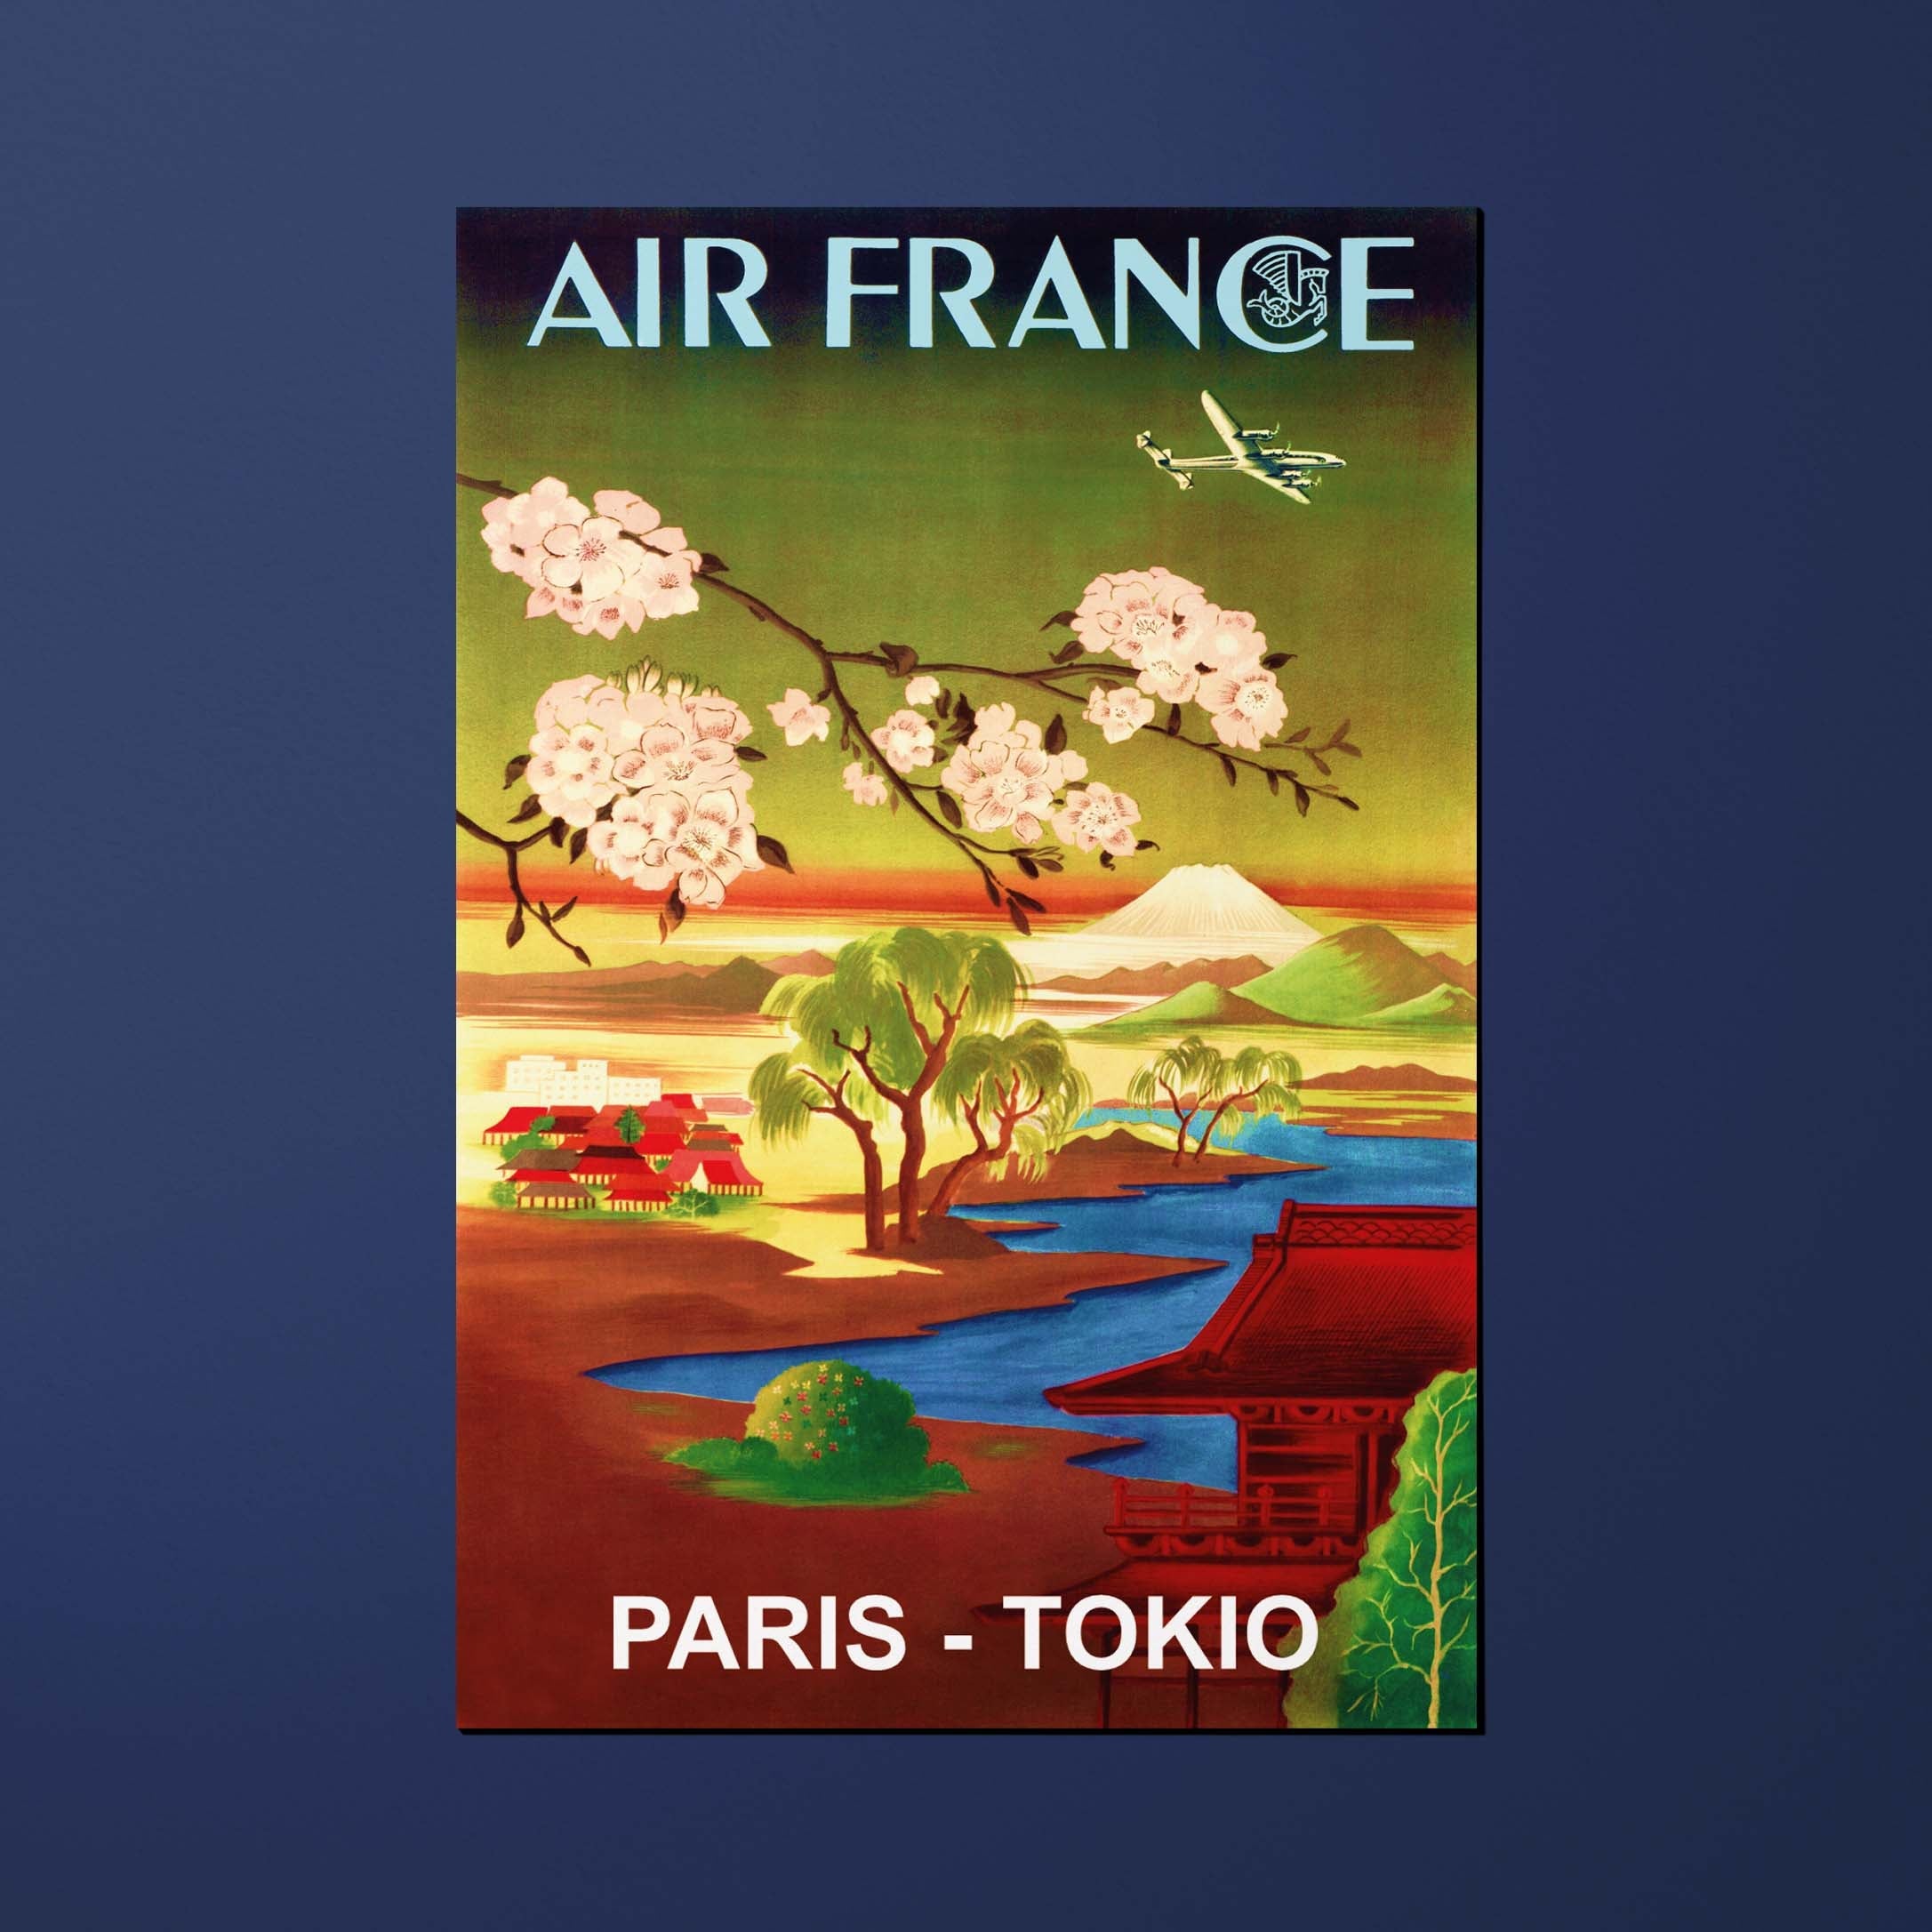 Air France Legend Paris postcard - Tokio, cherry blossoms